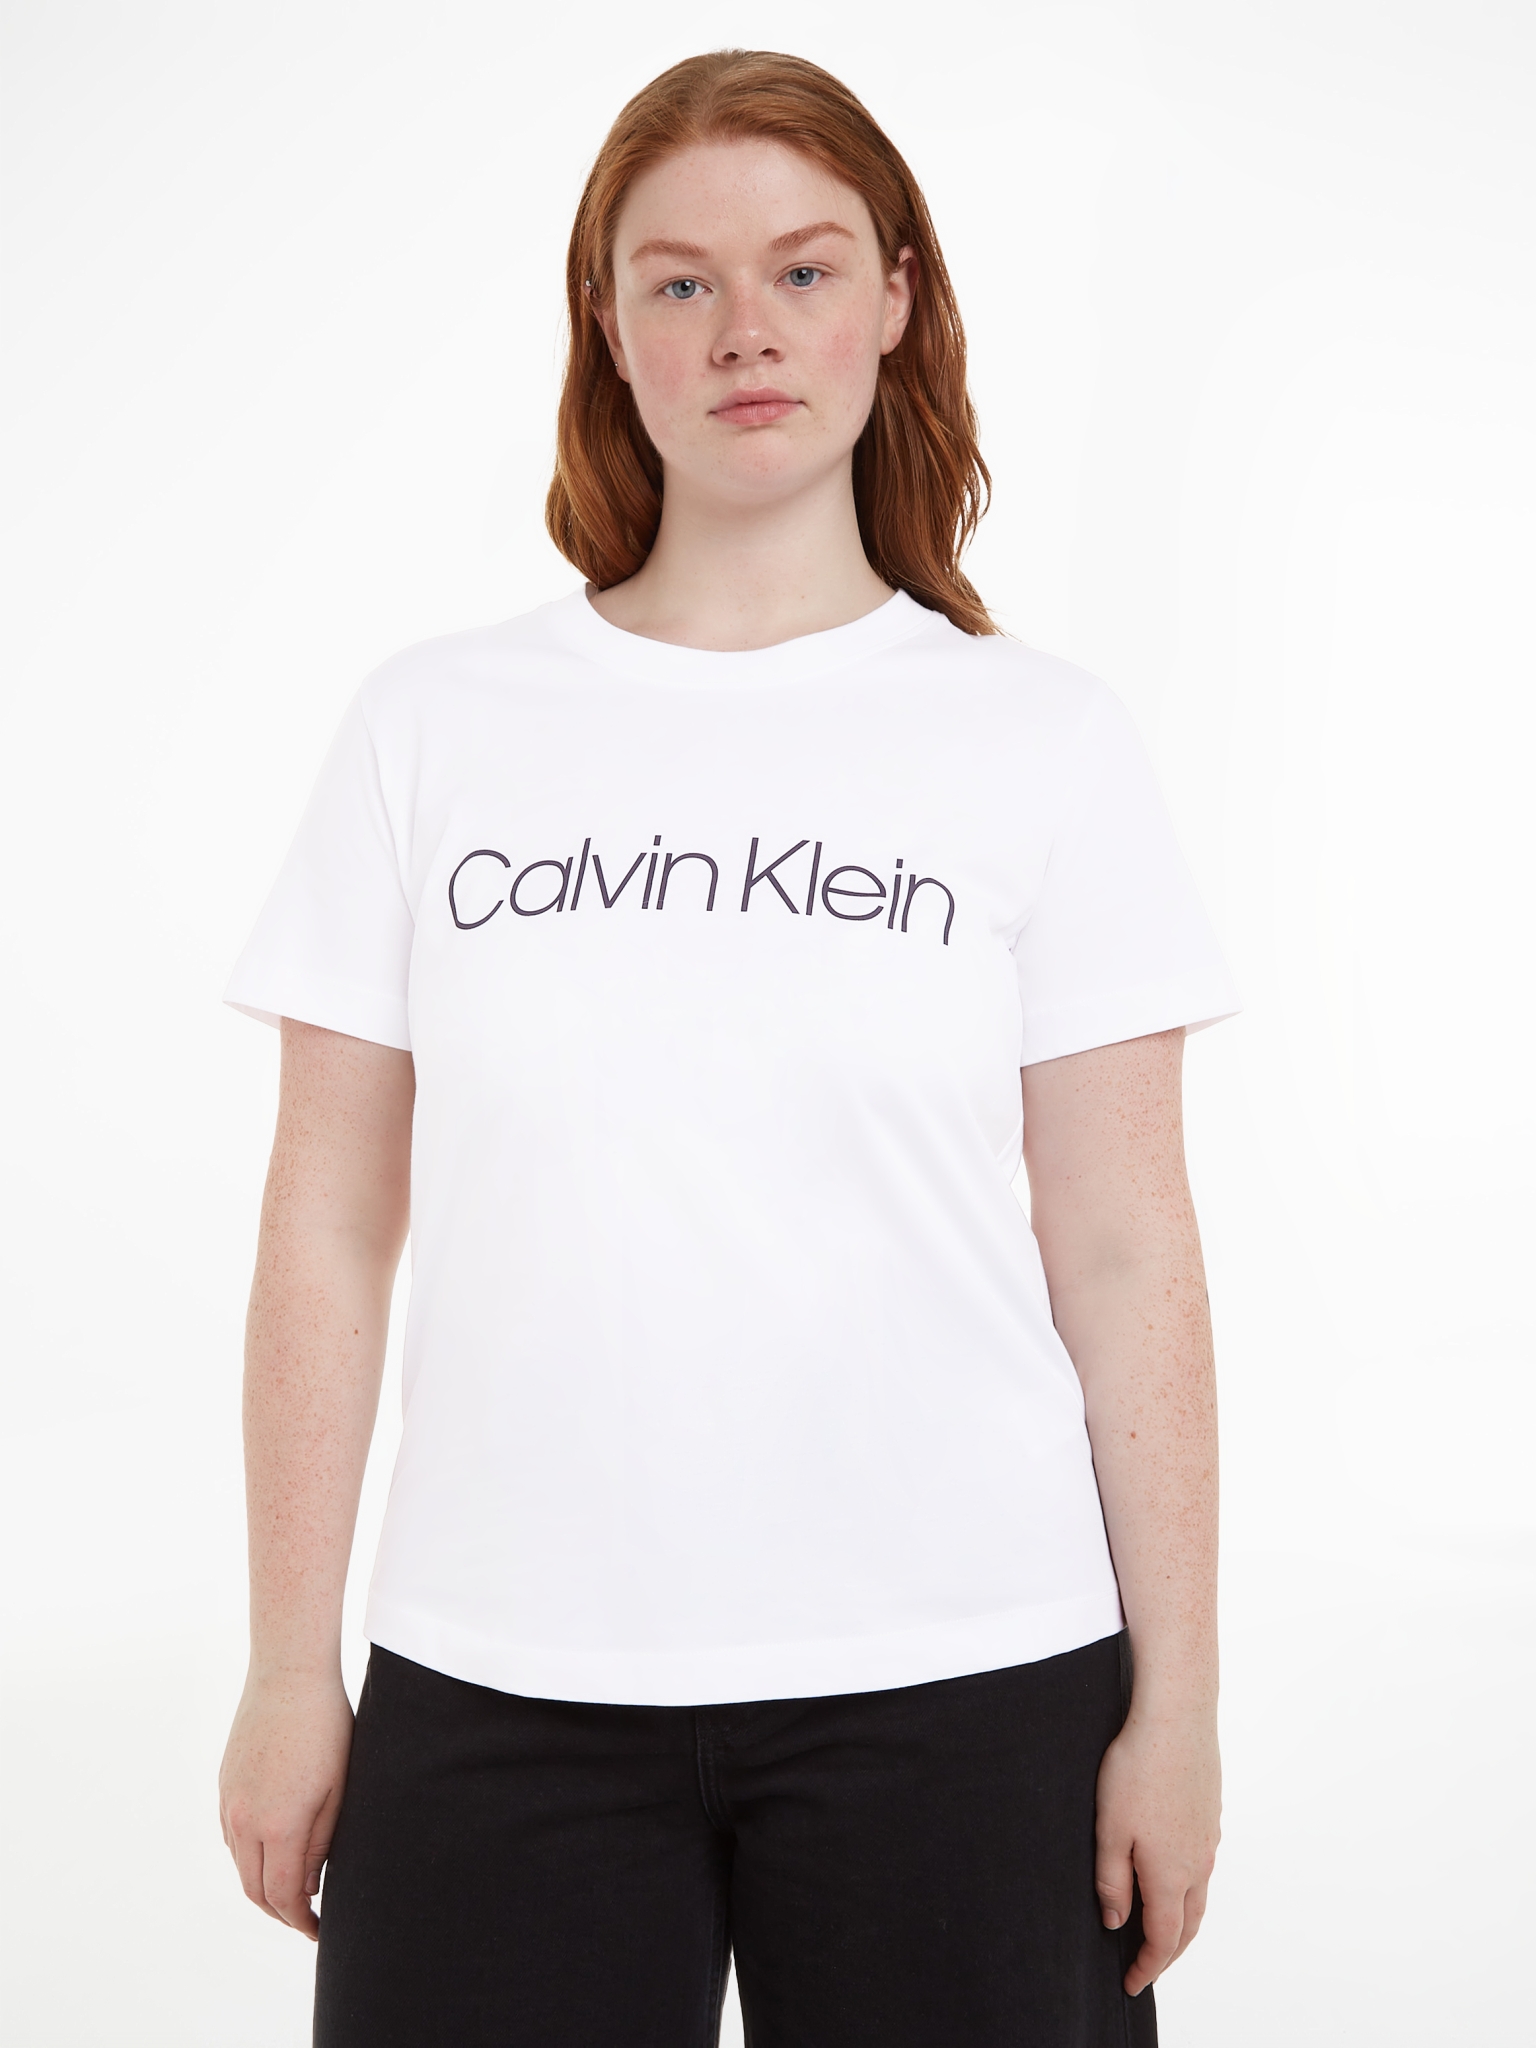 CALVIN KLEIN CURVES Shirts mit Logo 10663308